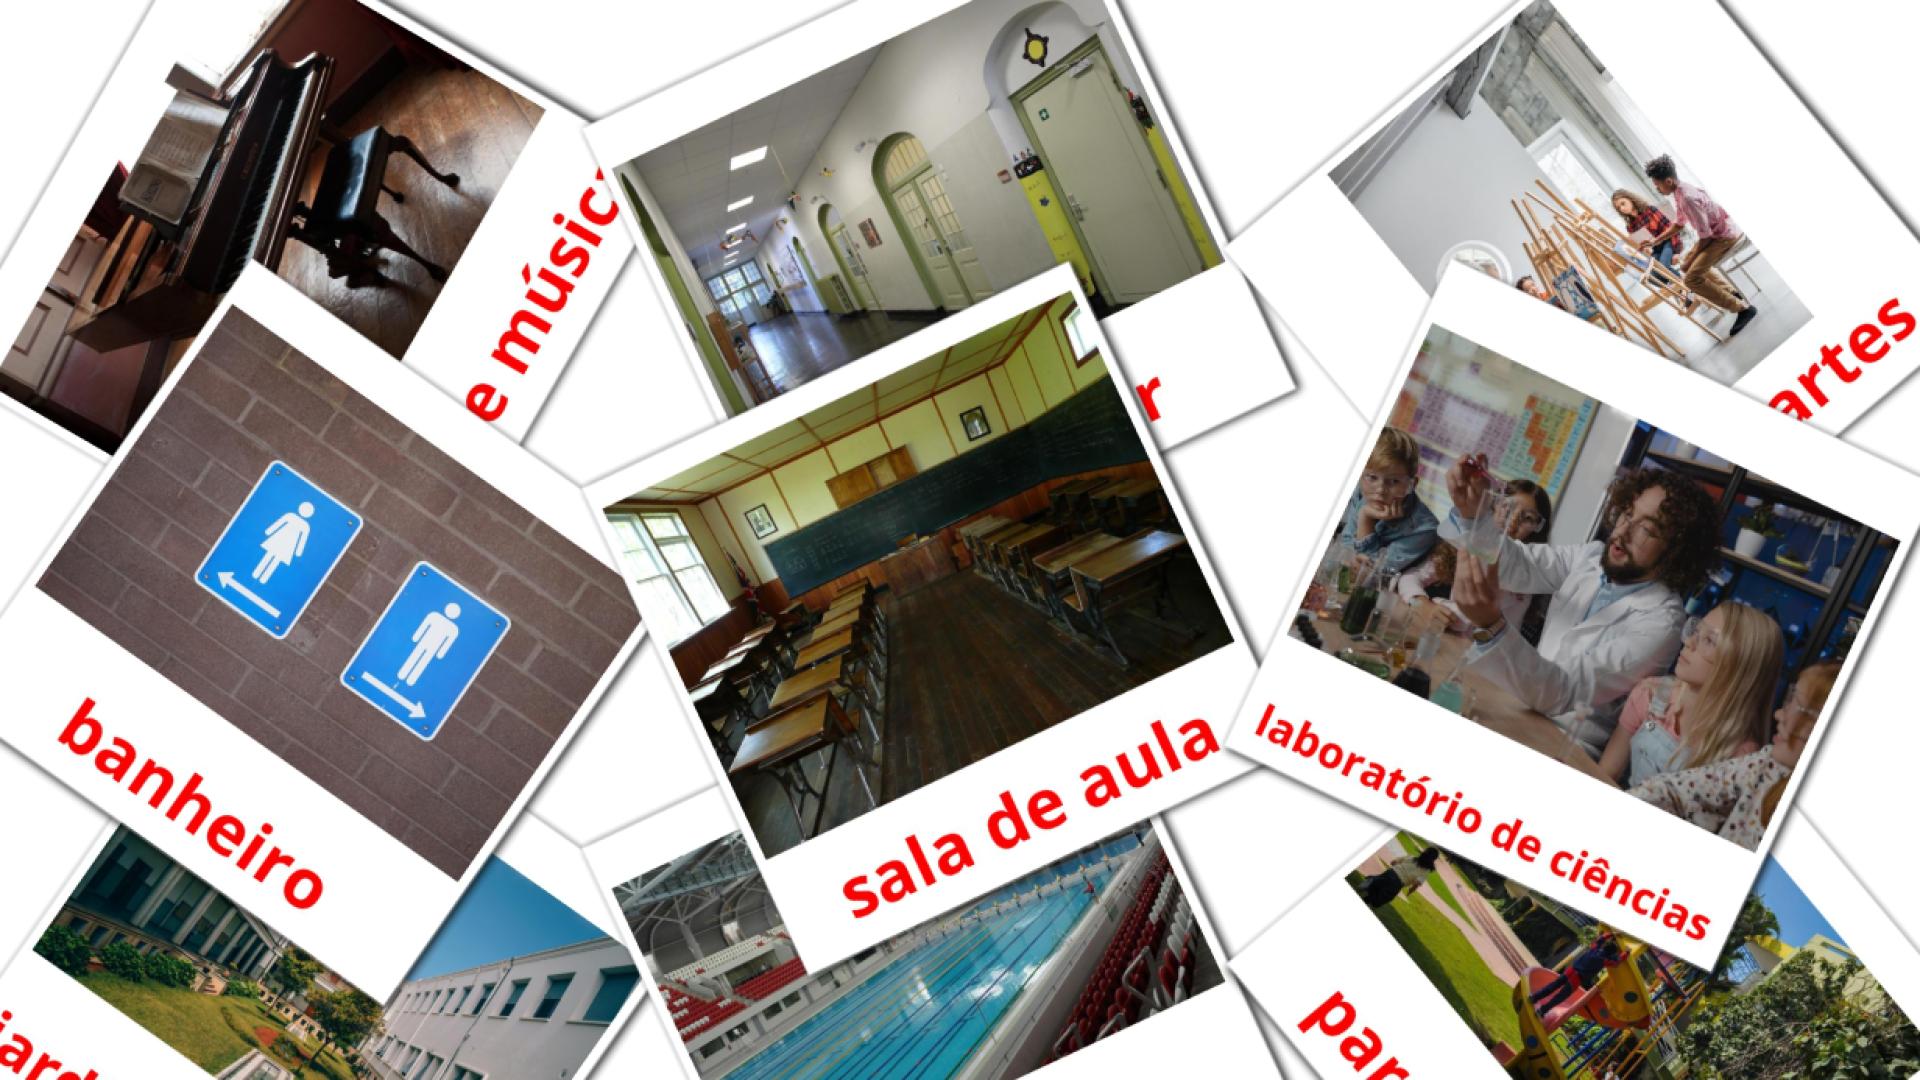 17 Bildkarten für Edifício escolar